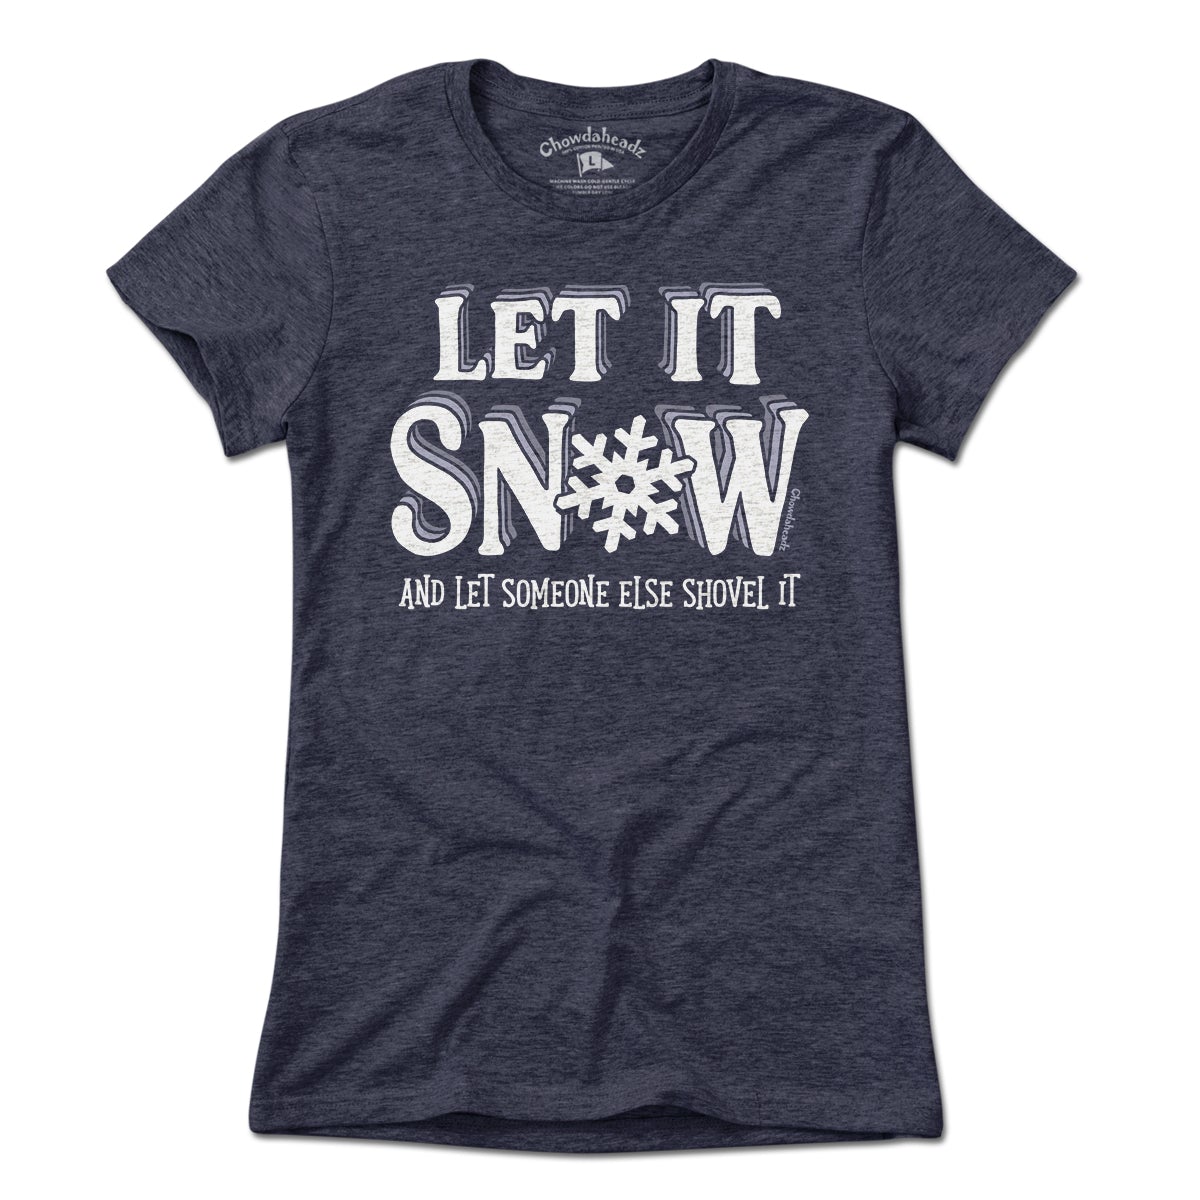 Let It Snow T-Shirt - Chowdaheadz